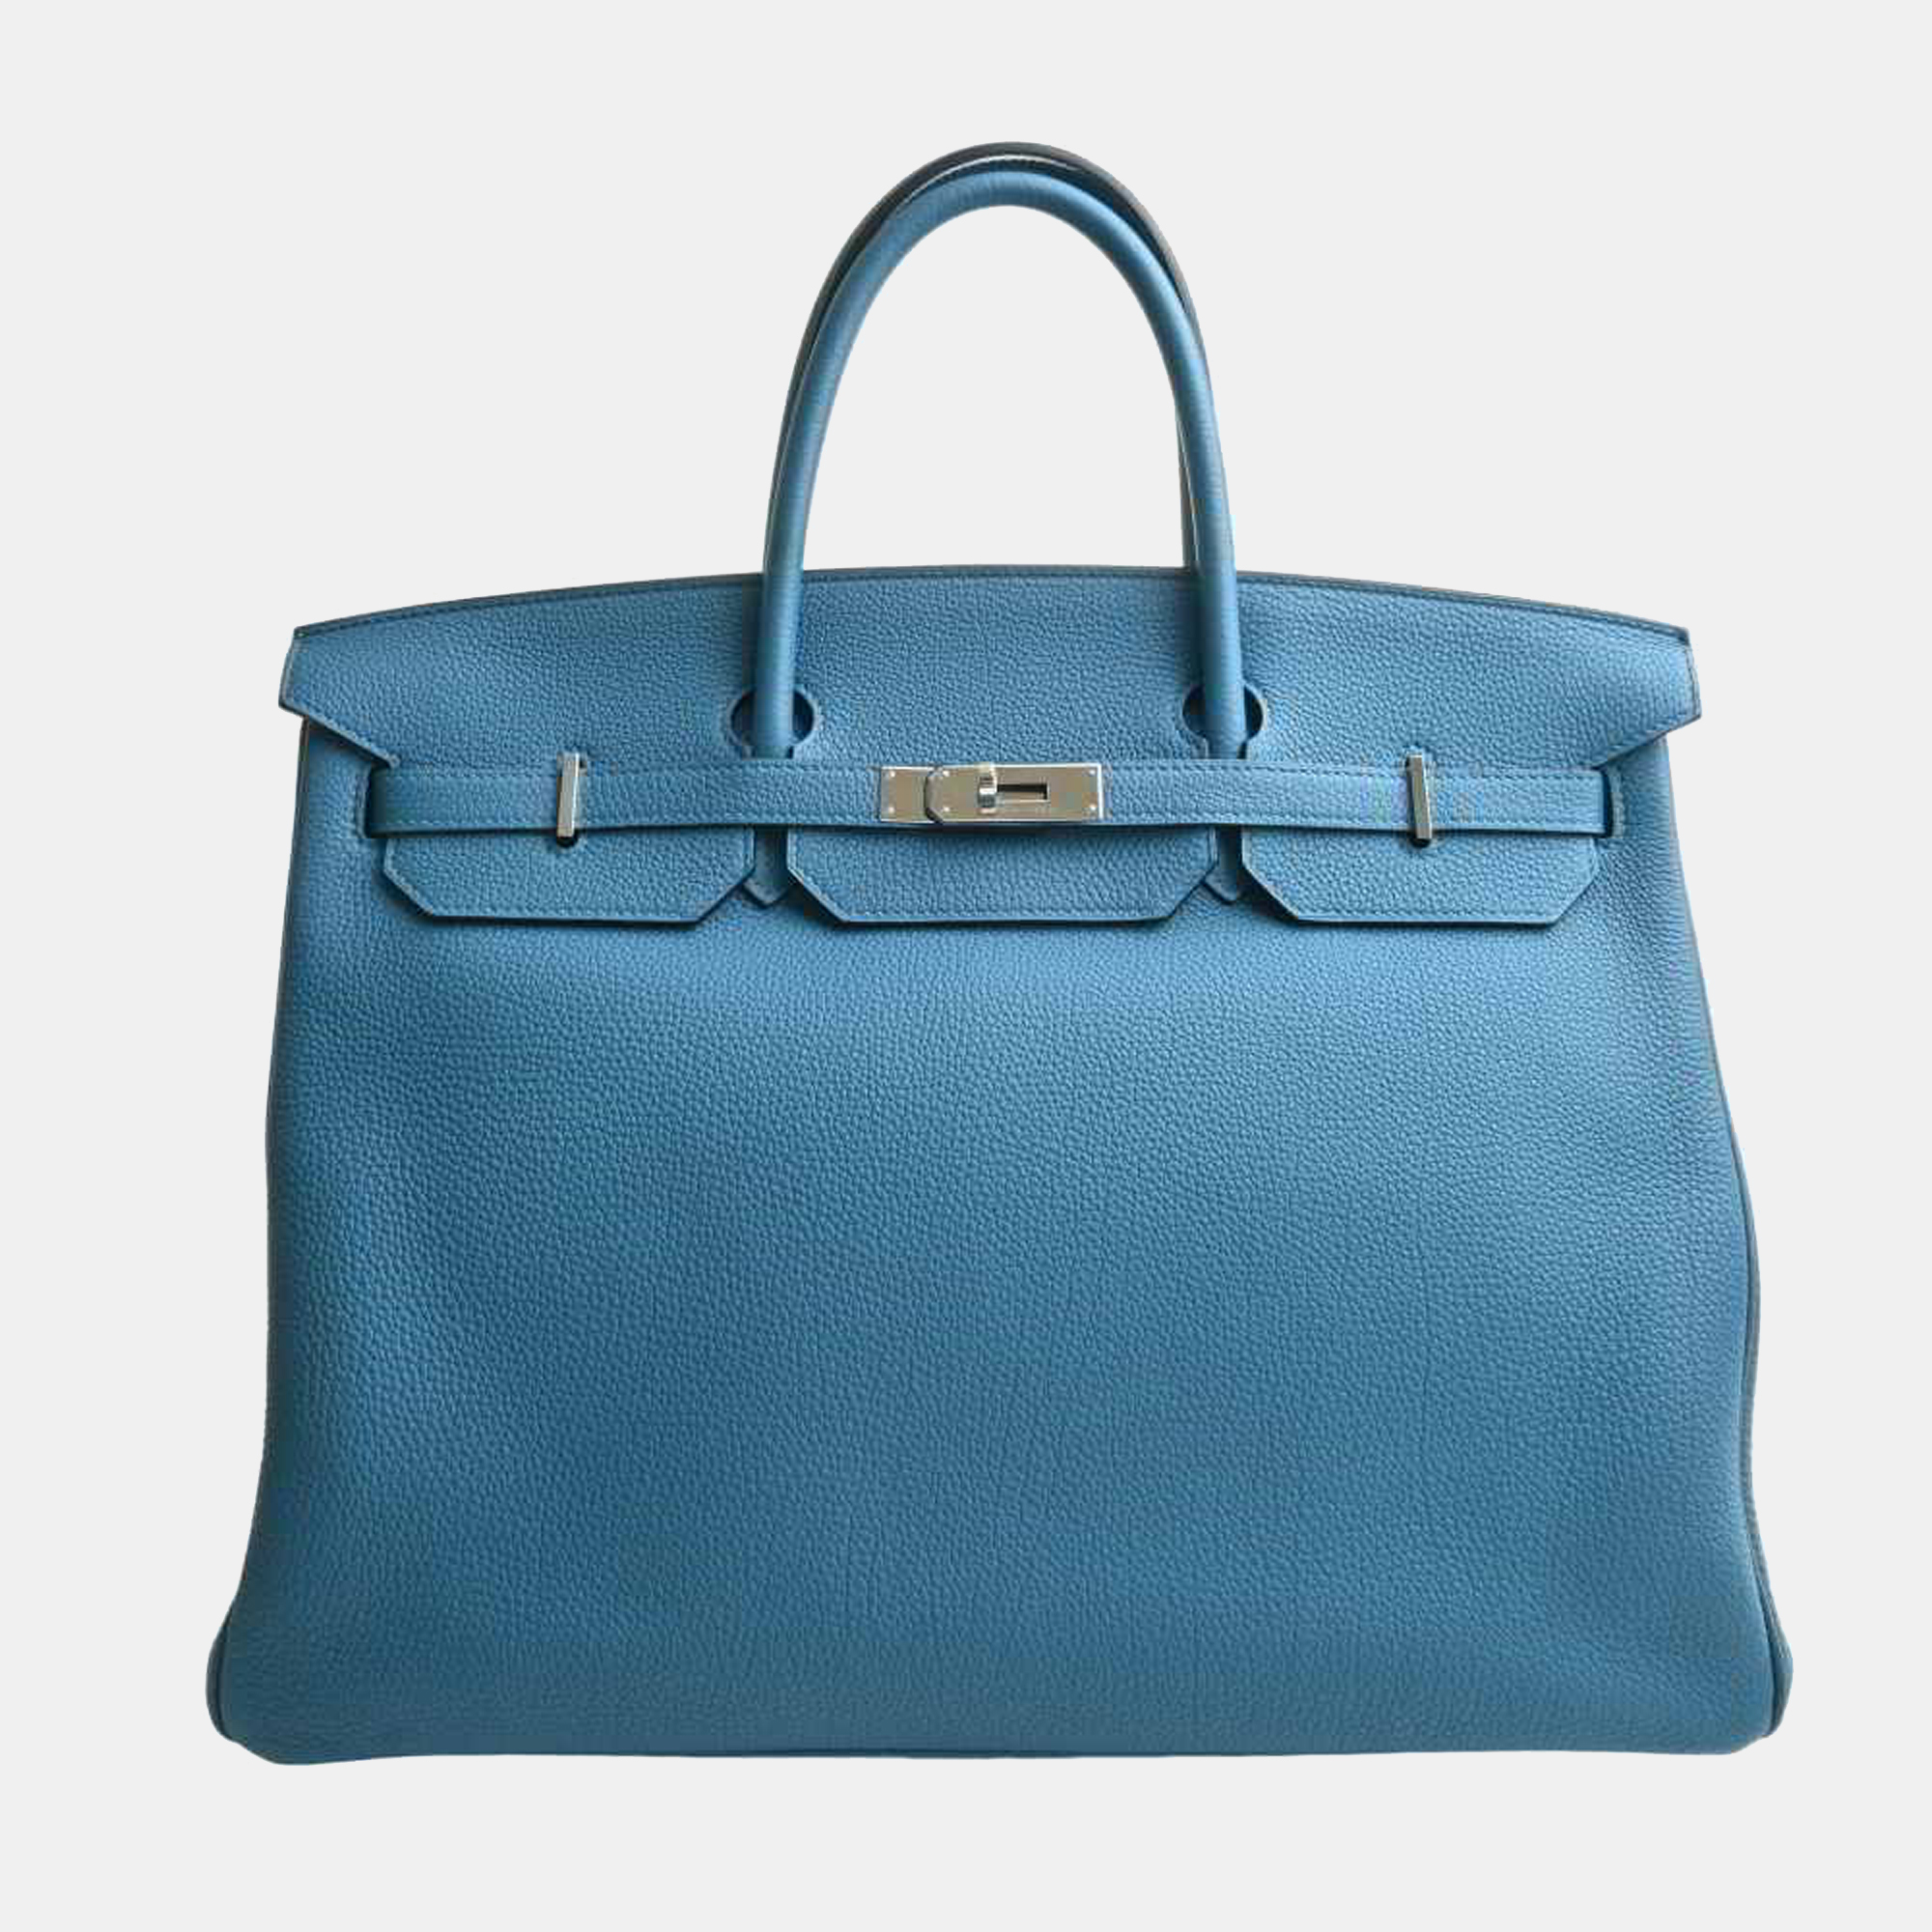 Hermes Togo Birkin 40 handbag blue